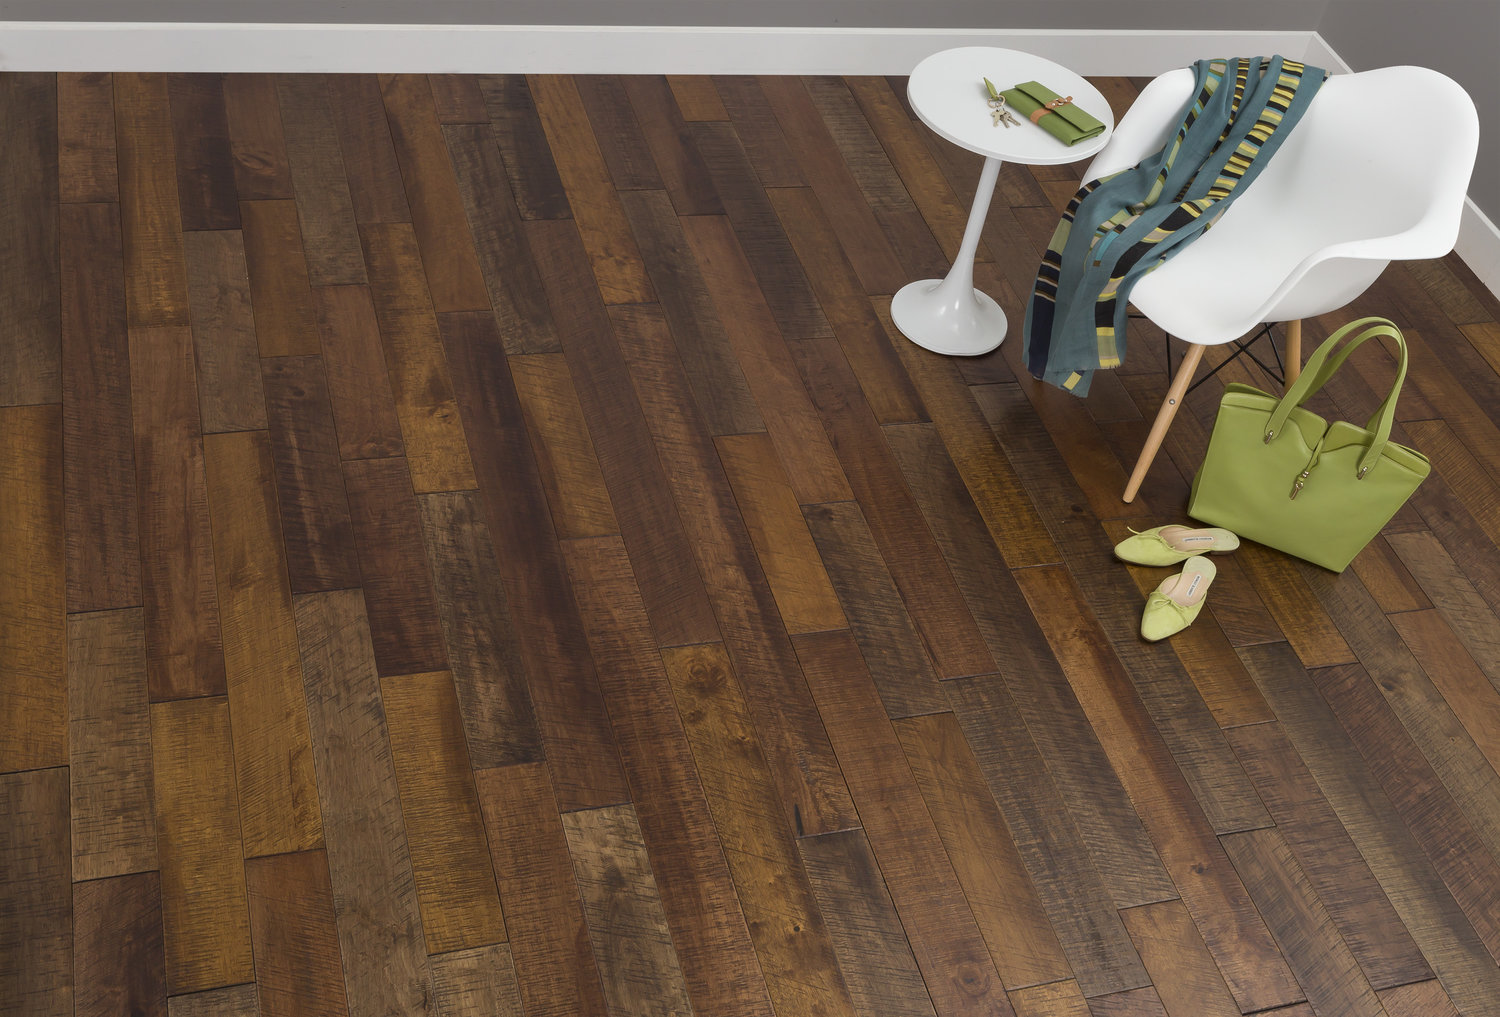 Boardwalk Hardwood Floors, Pacific Pecan Hardwood Flooring Reviews